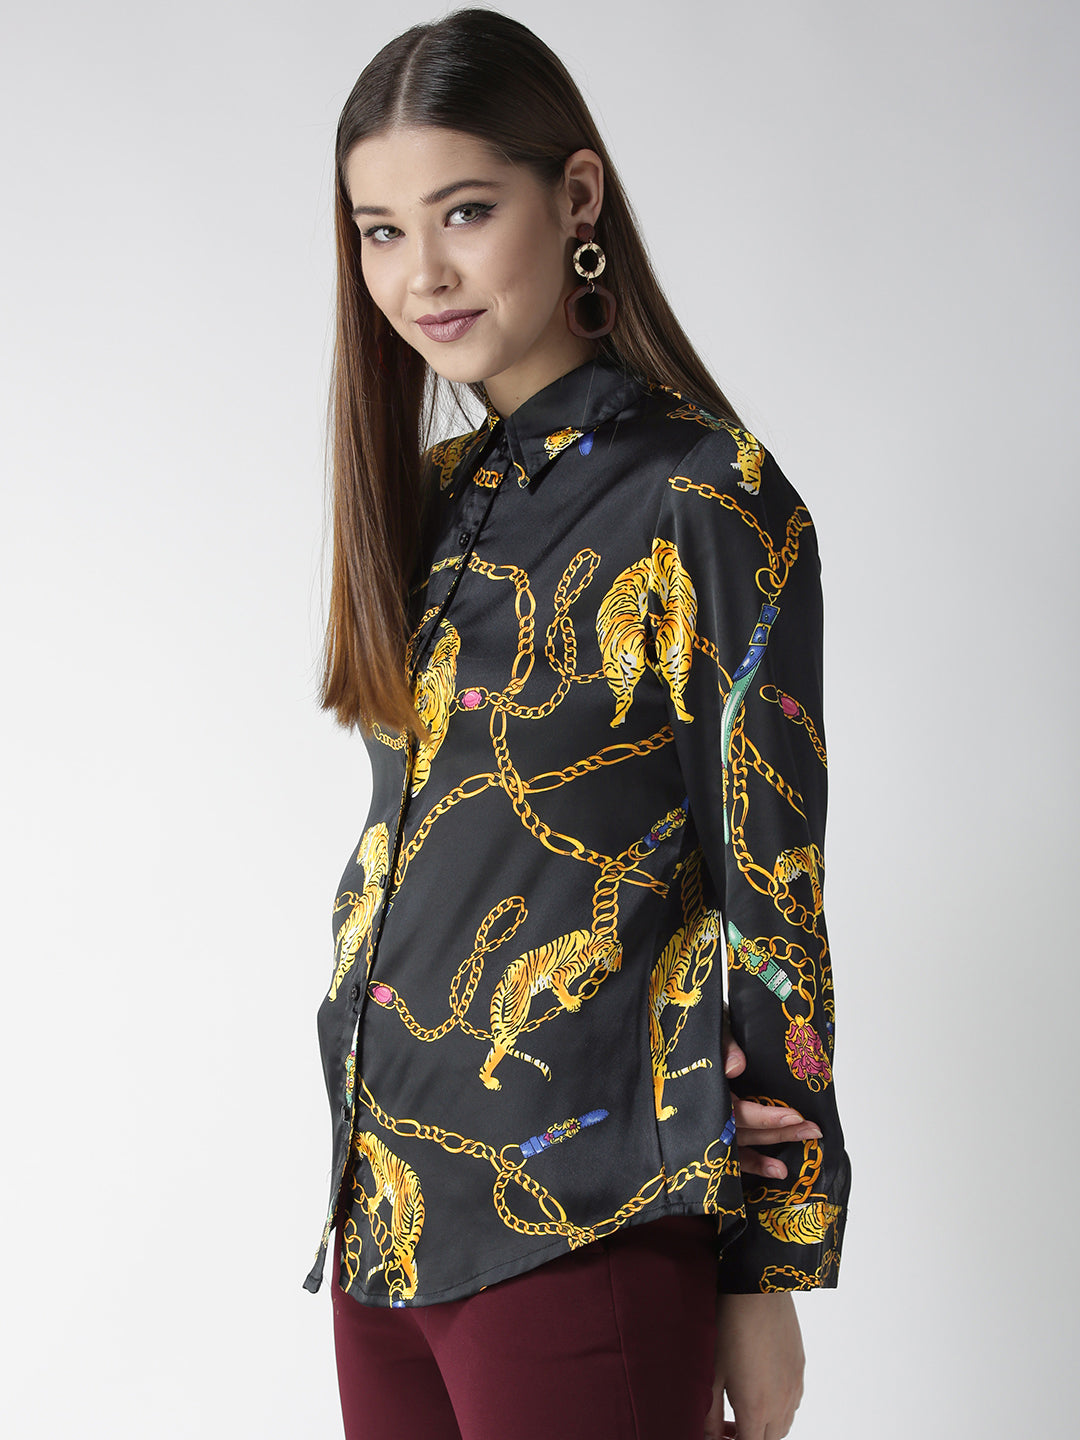 Women's Black and Golden Animal Chain Print Shirt